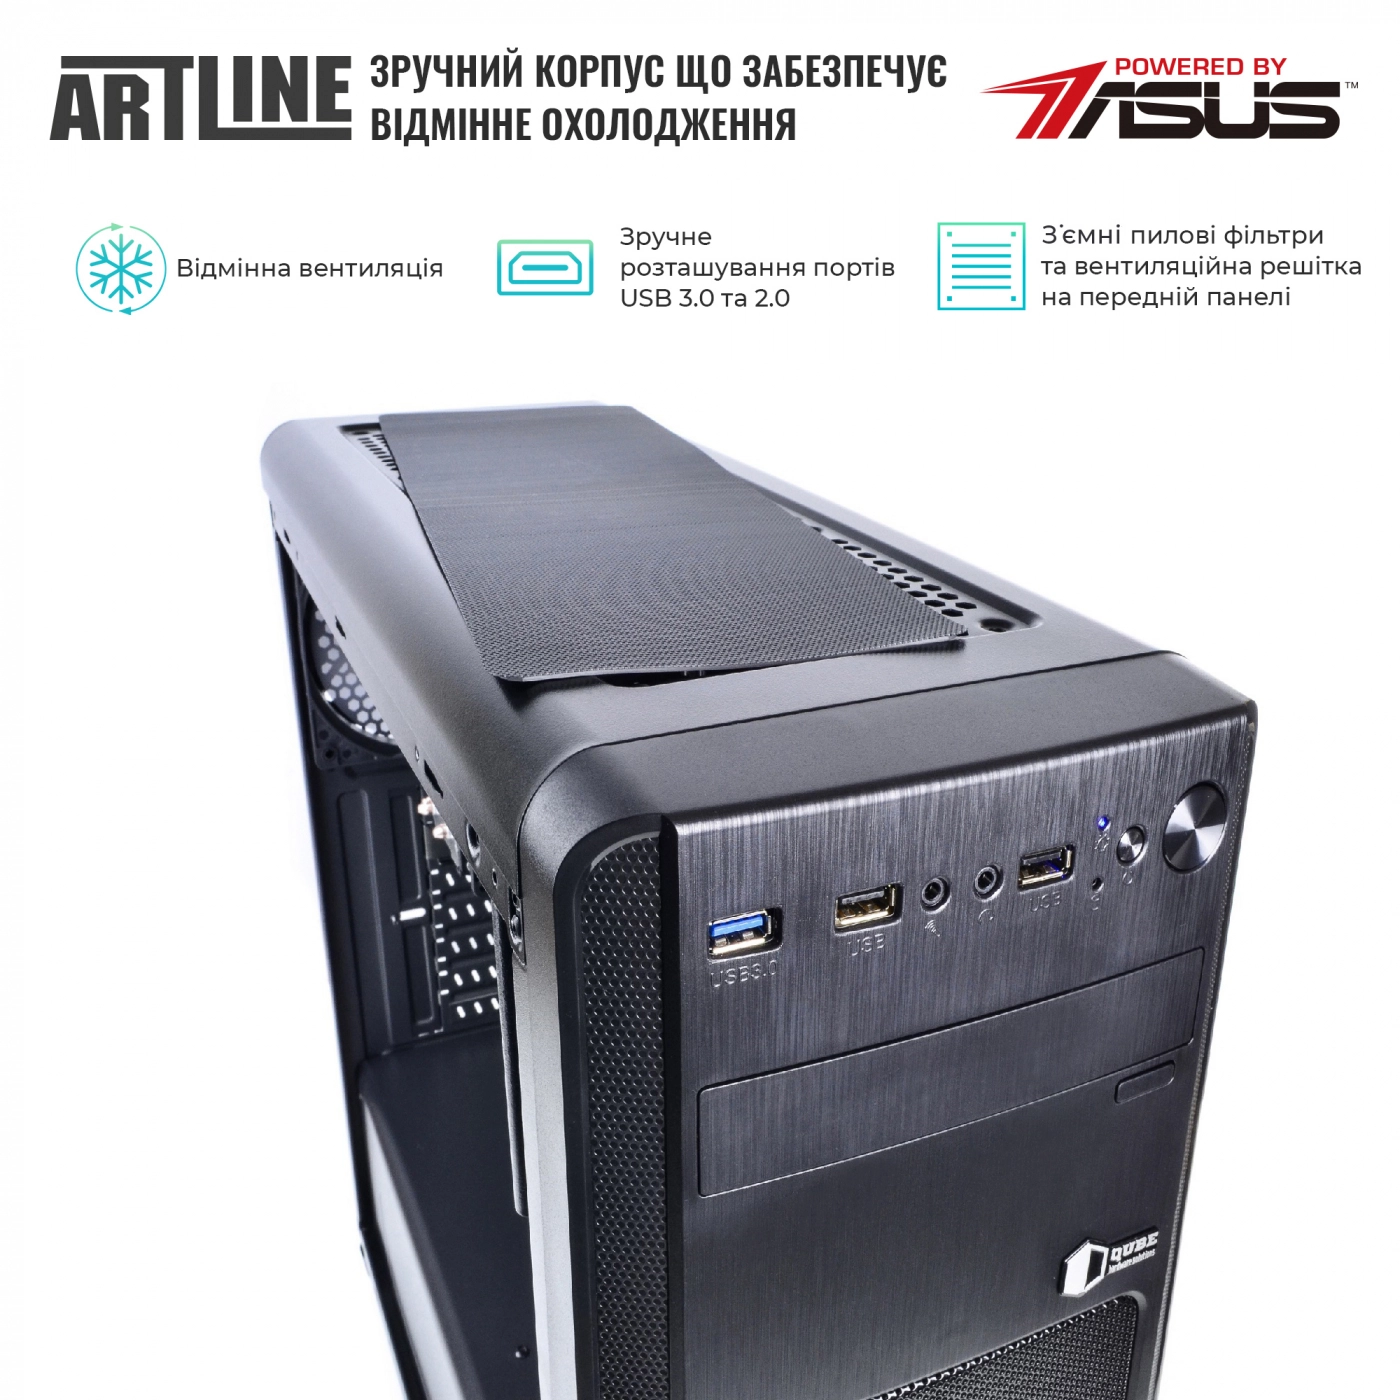 Купити Сервер ARTLINE Business T13v14 - фото 2